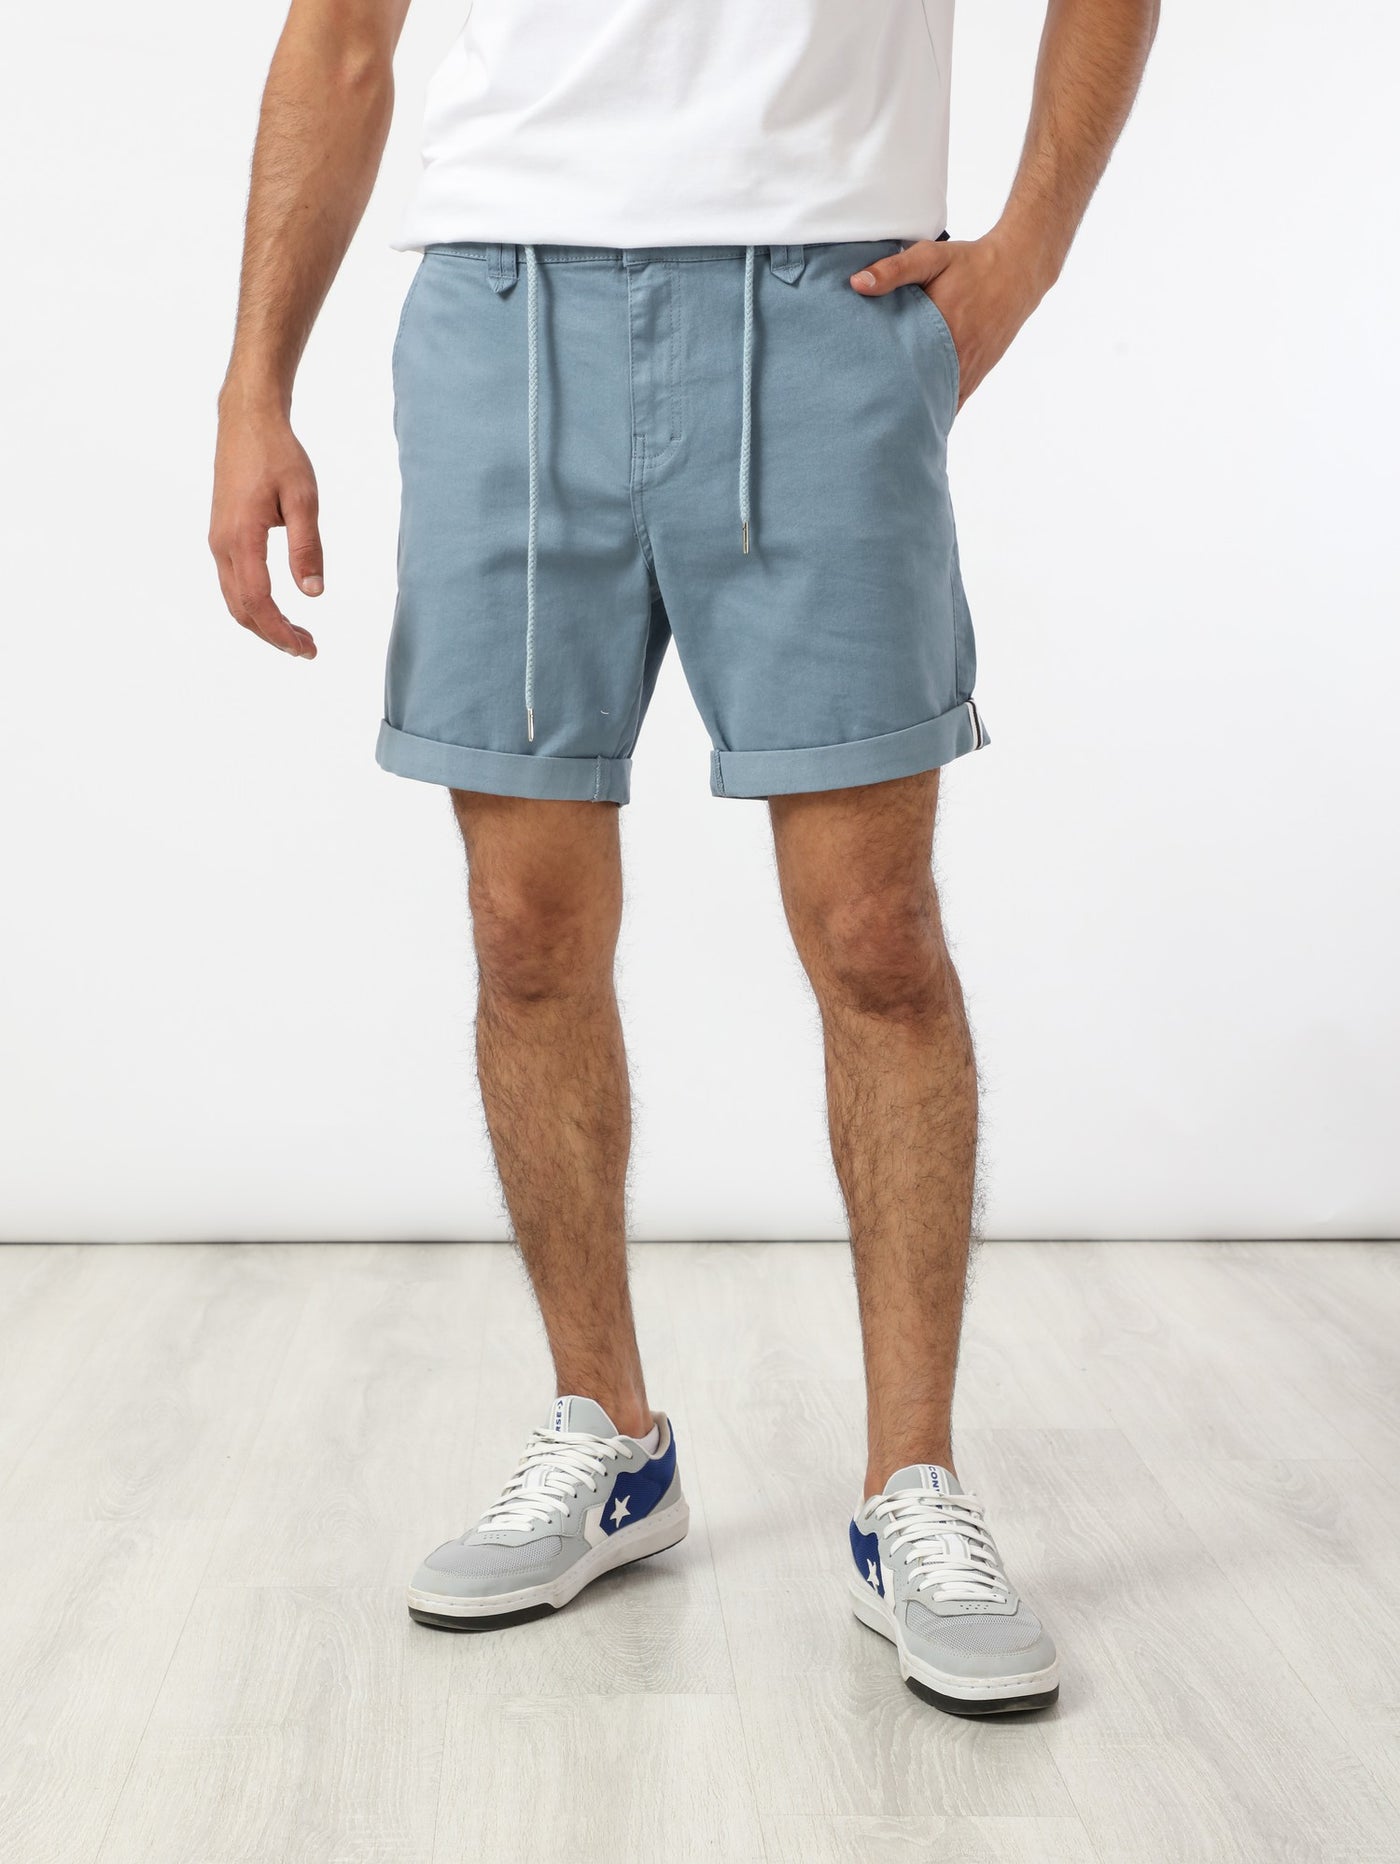 Shorts - Drawstring - Solid